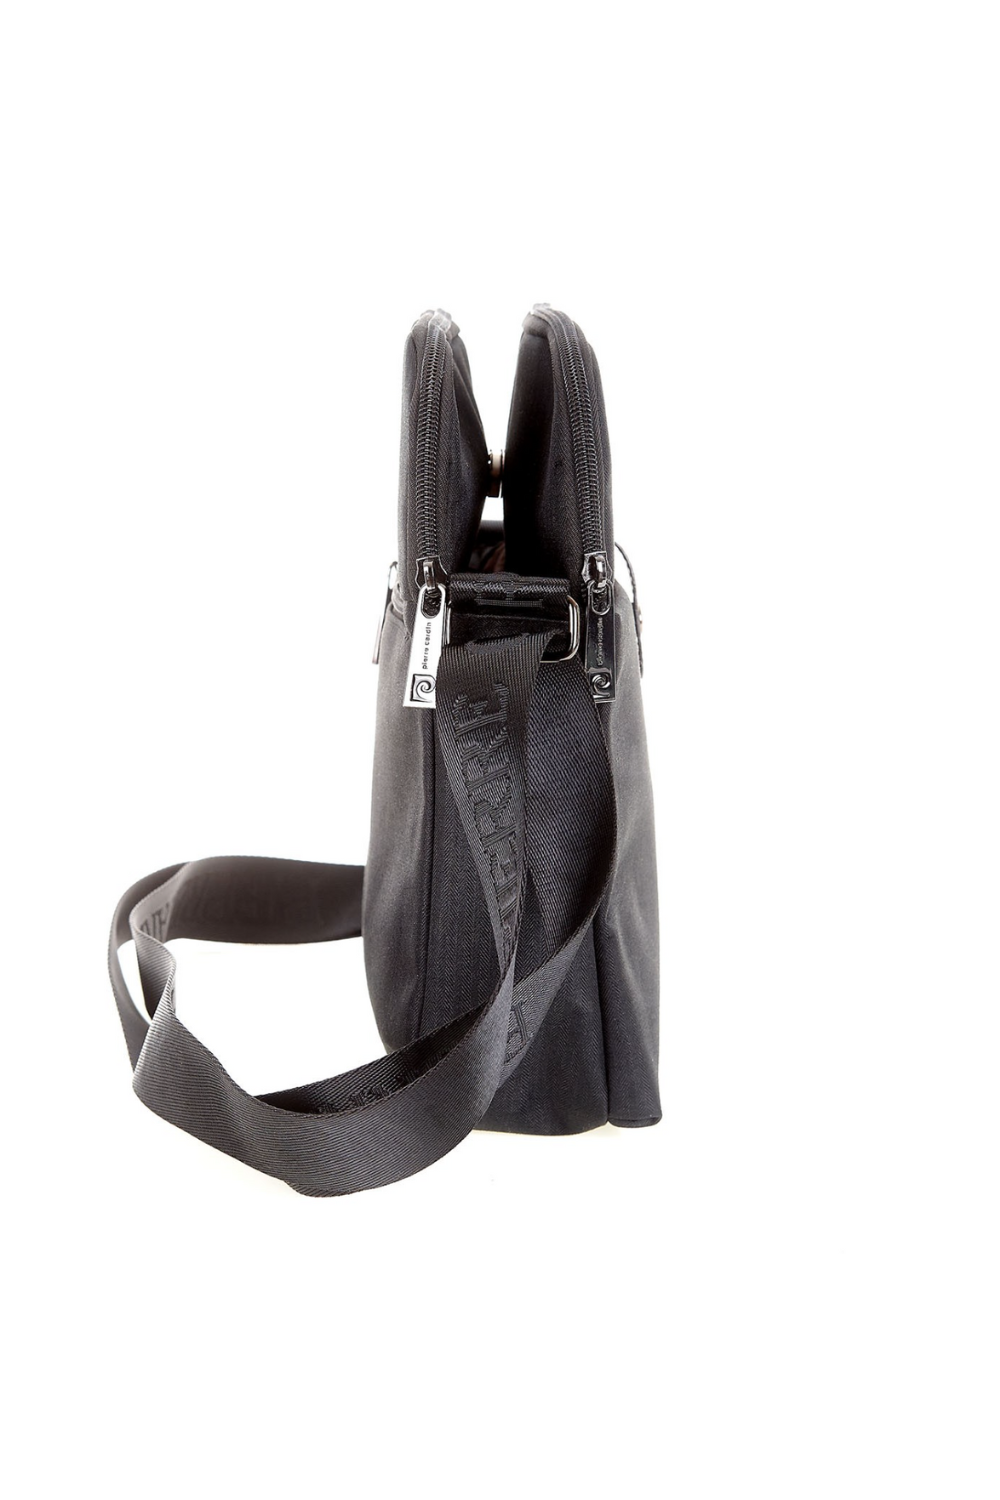 Pierre Cardin black handbag for men